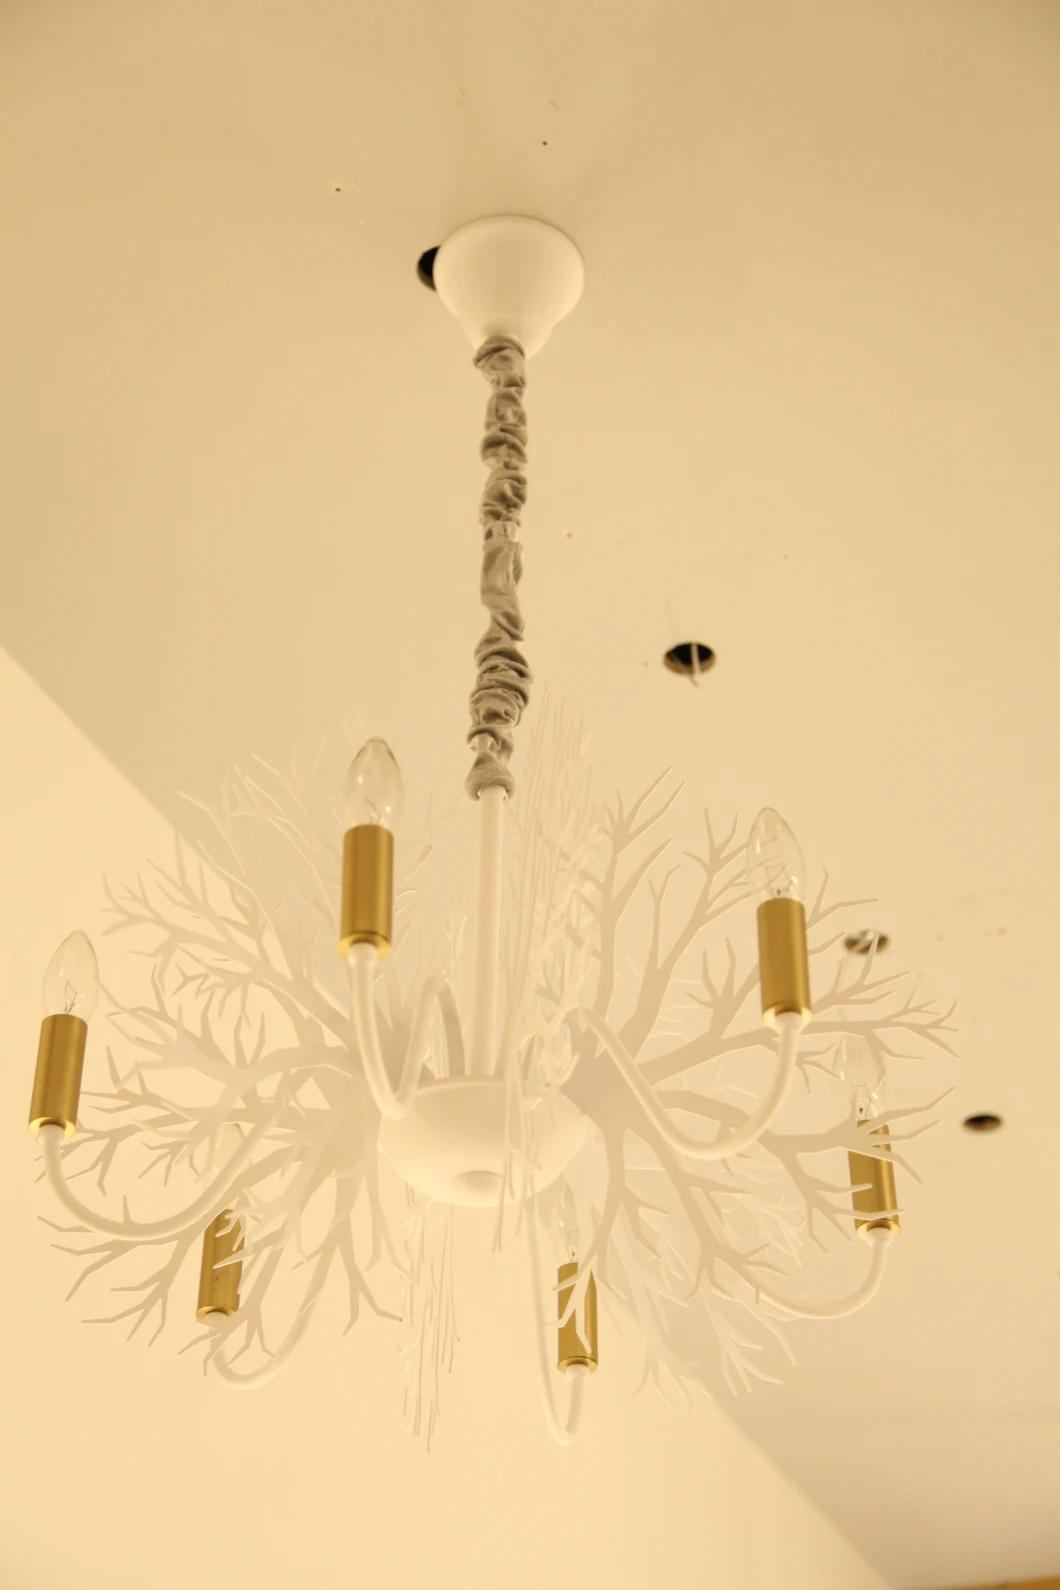 Masivel Nordic Luxury Pendant Lights Decorative White Modern Chandelier